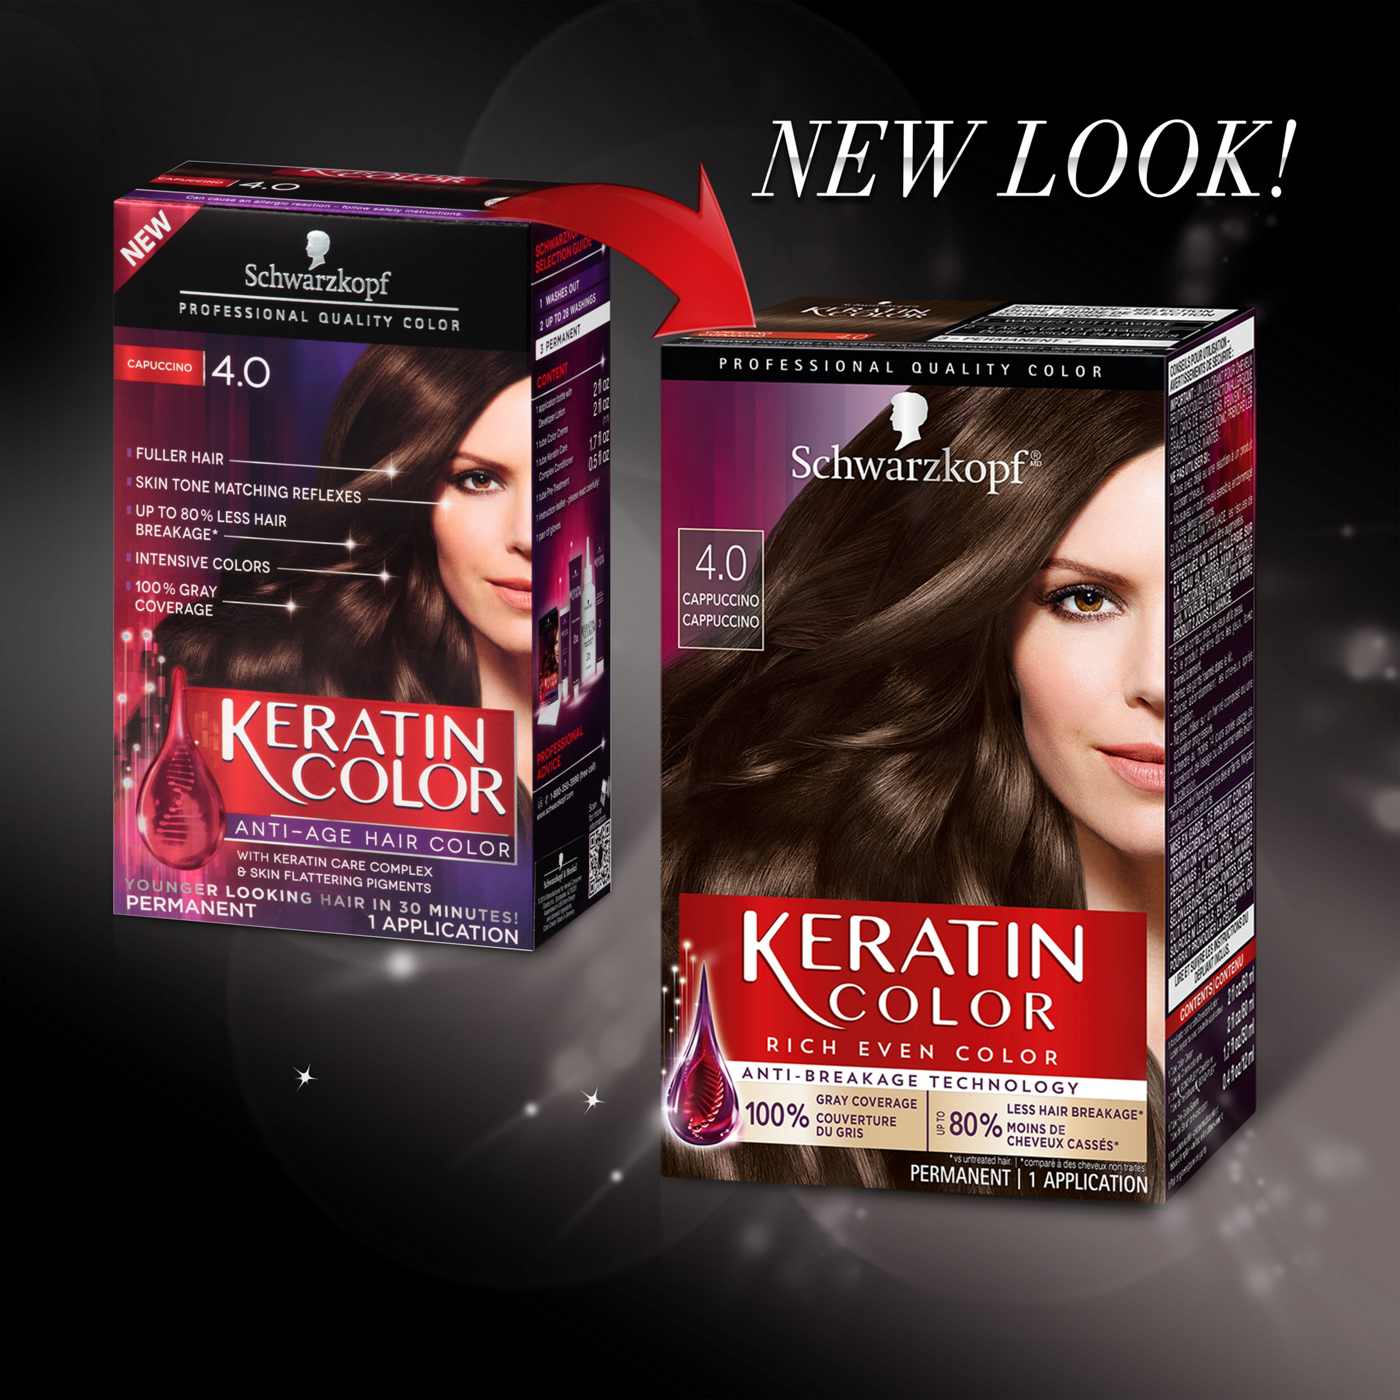 Schwarzkopf Keratin Color Permanent Hair Color Cream, 4.0 Cappuccino; image 2 of 6